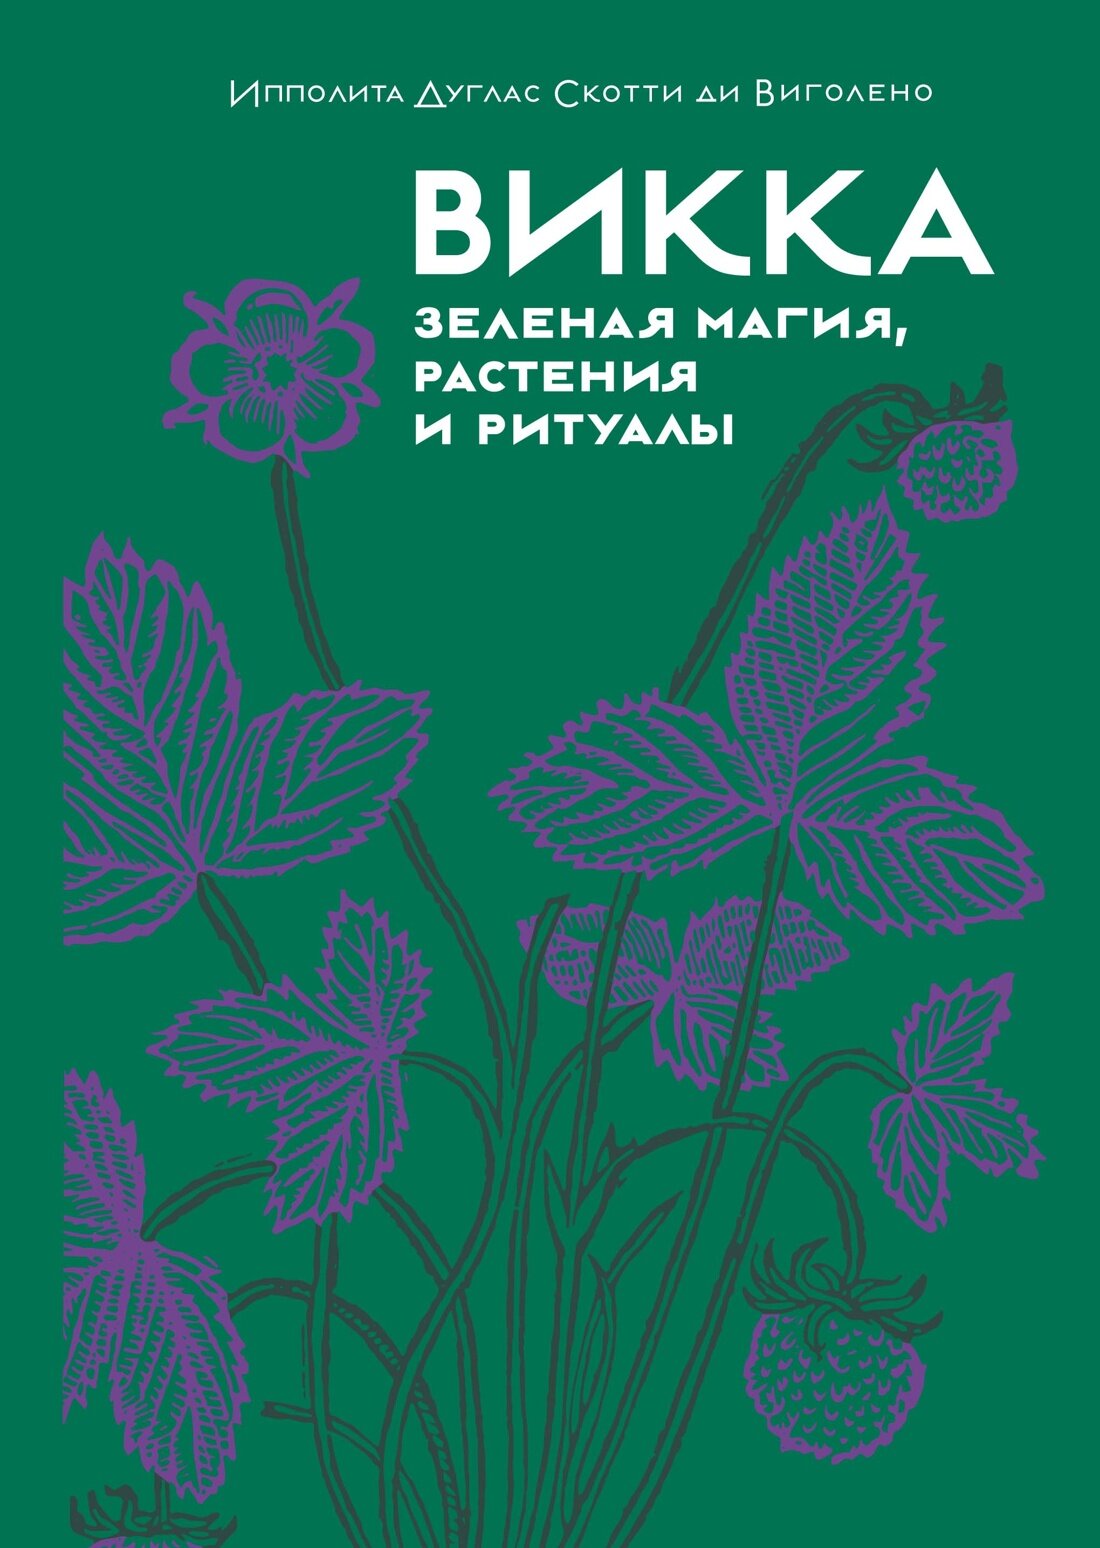 Книга Викка. Зеленая магия, растения и ритуалы. Дуглас Скотти ди Виголено